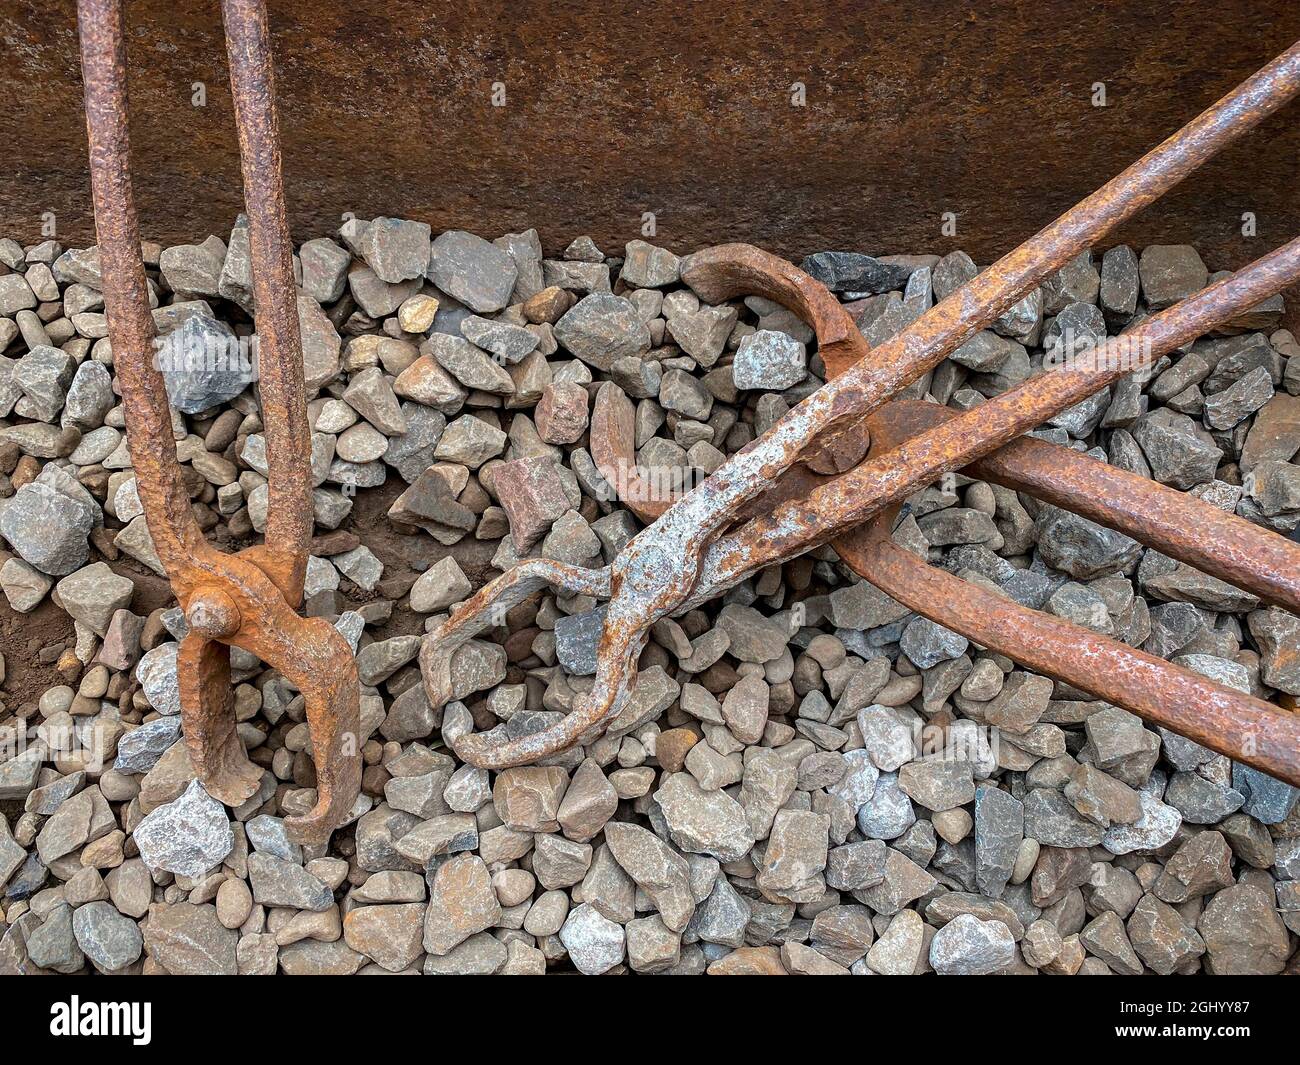 Industrieller Zerfall - alte verlassene Eisenbahnanlagen rosten langsam weg. Stockfoto